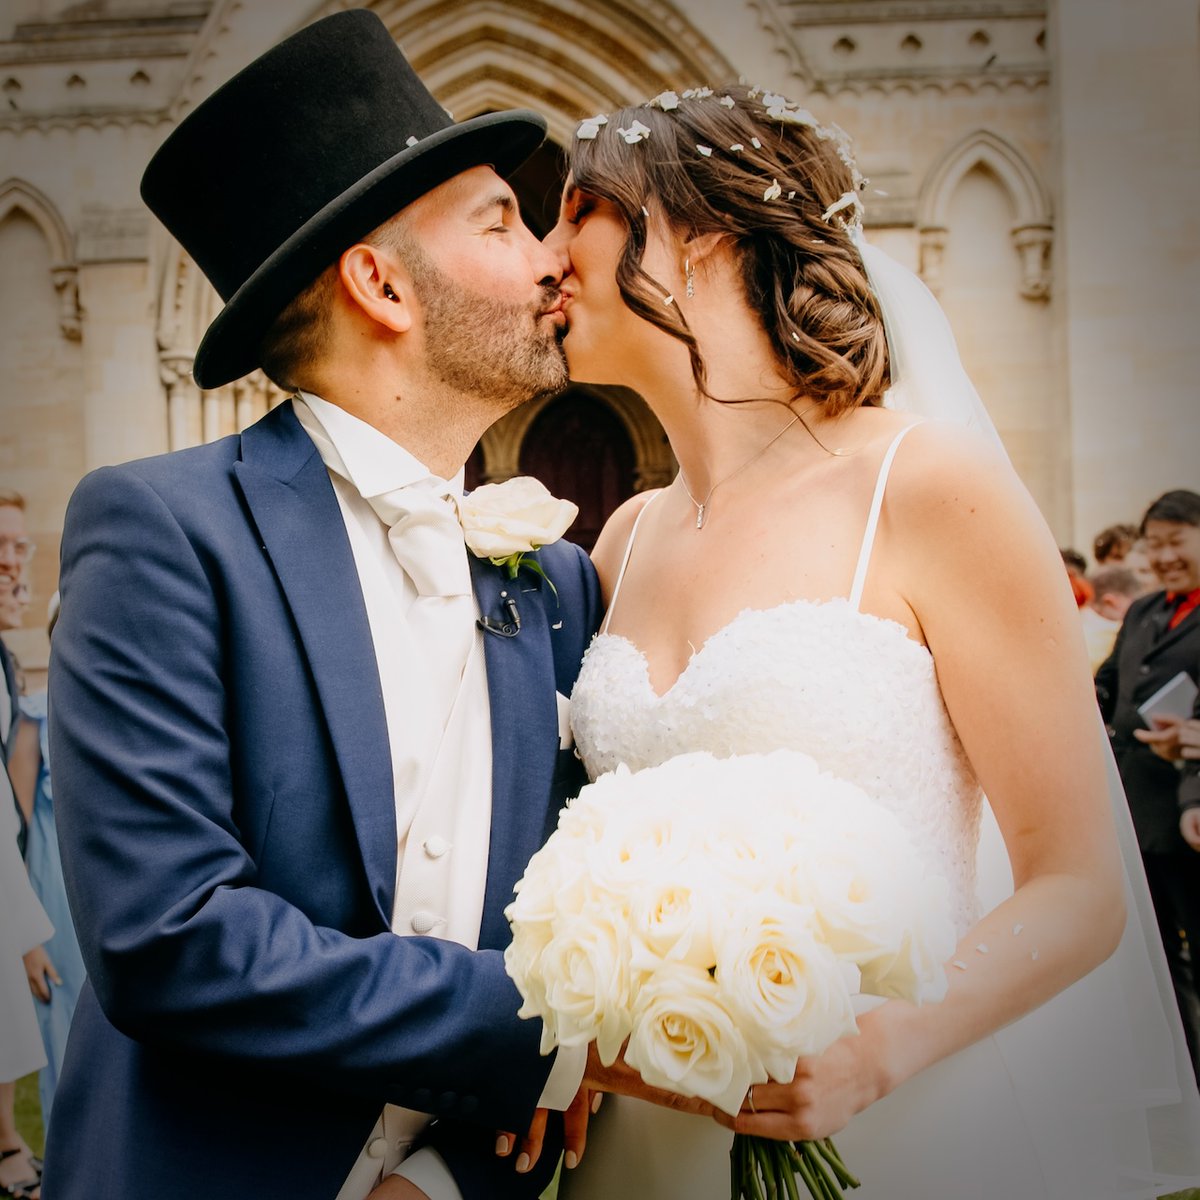 We did it! 💕
#WeddingCeremony #CeremonyFlowers #WeddingFlowers #WeddingFlorist  #Hertfordshire #HemelHempstead #MaplesFlowers